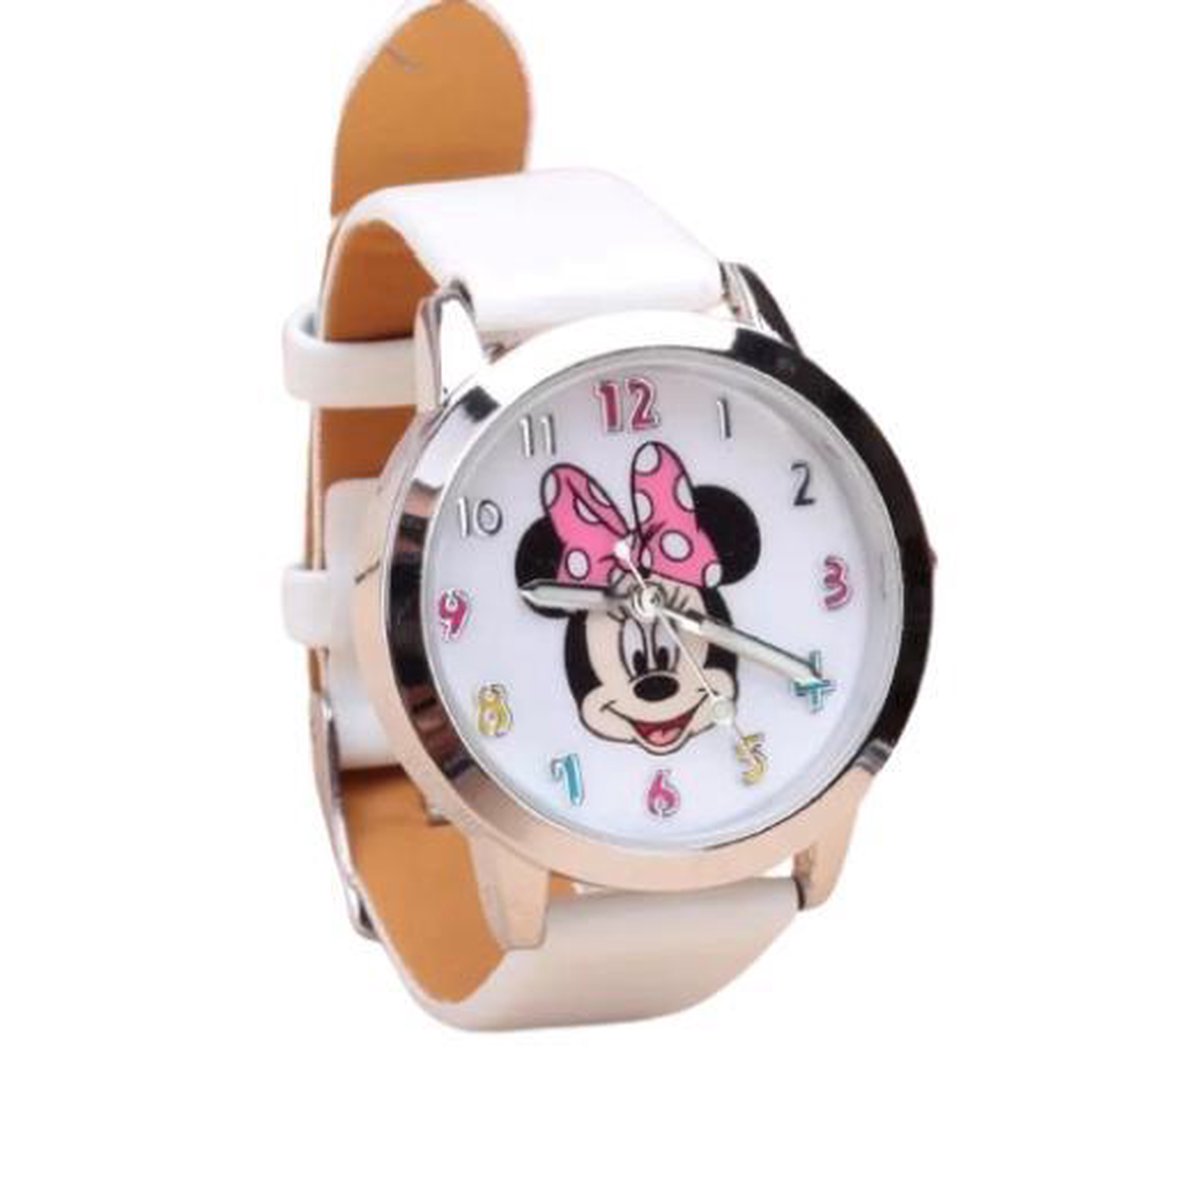 Kinder horloge met Minnie Mouse afbeelding met wit leer bandje